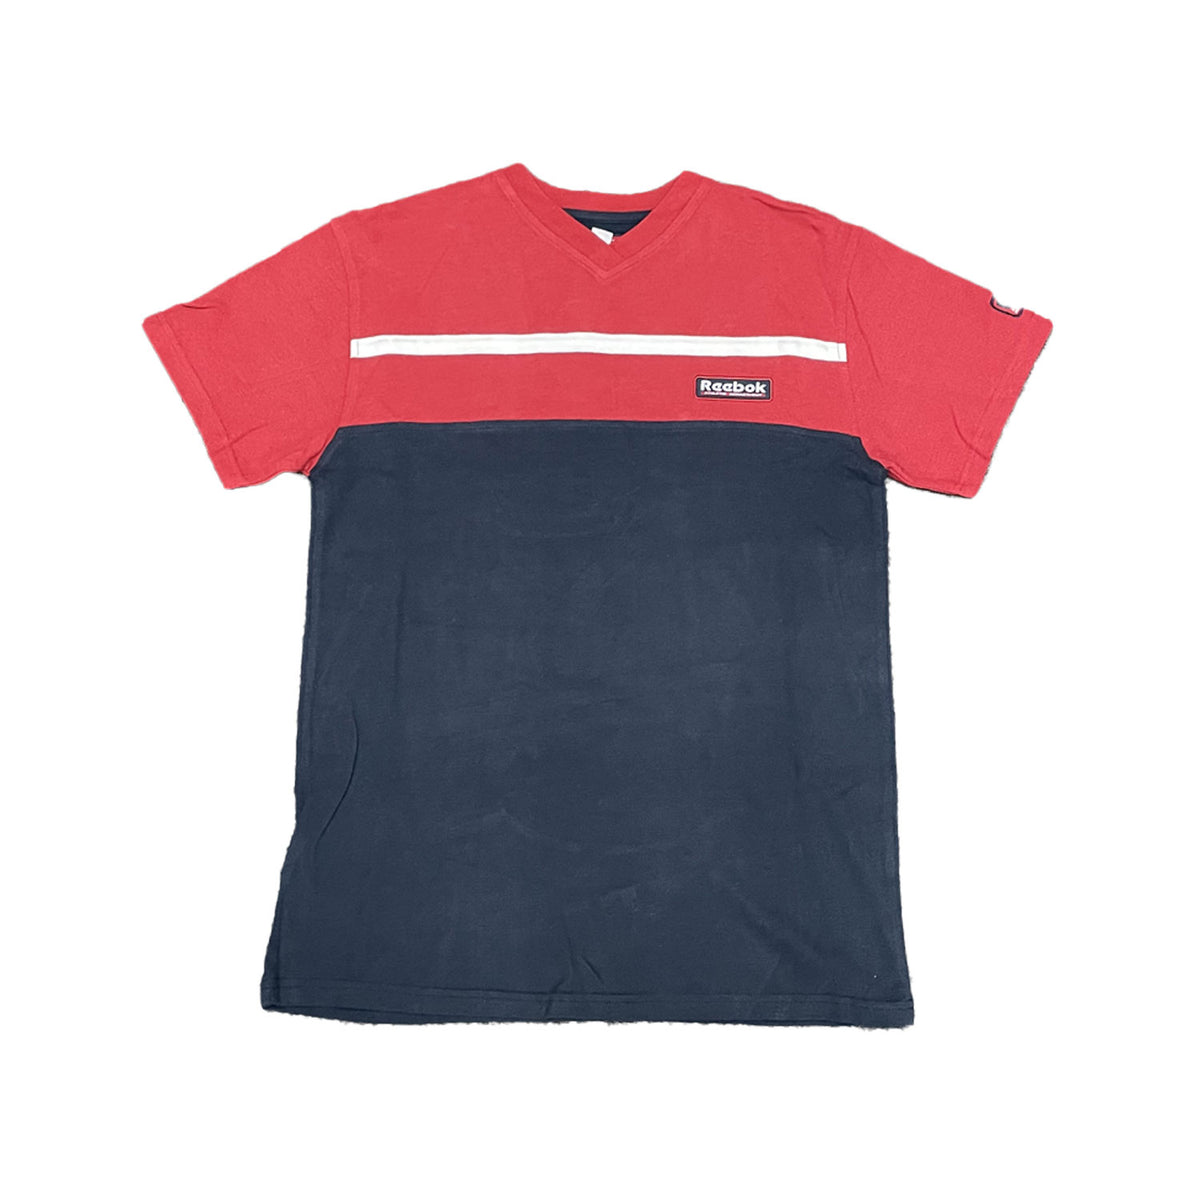 Reebok Original Womens Striped Athletic T-Shirt 2